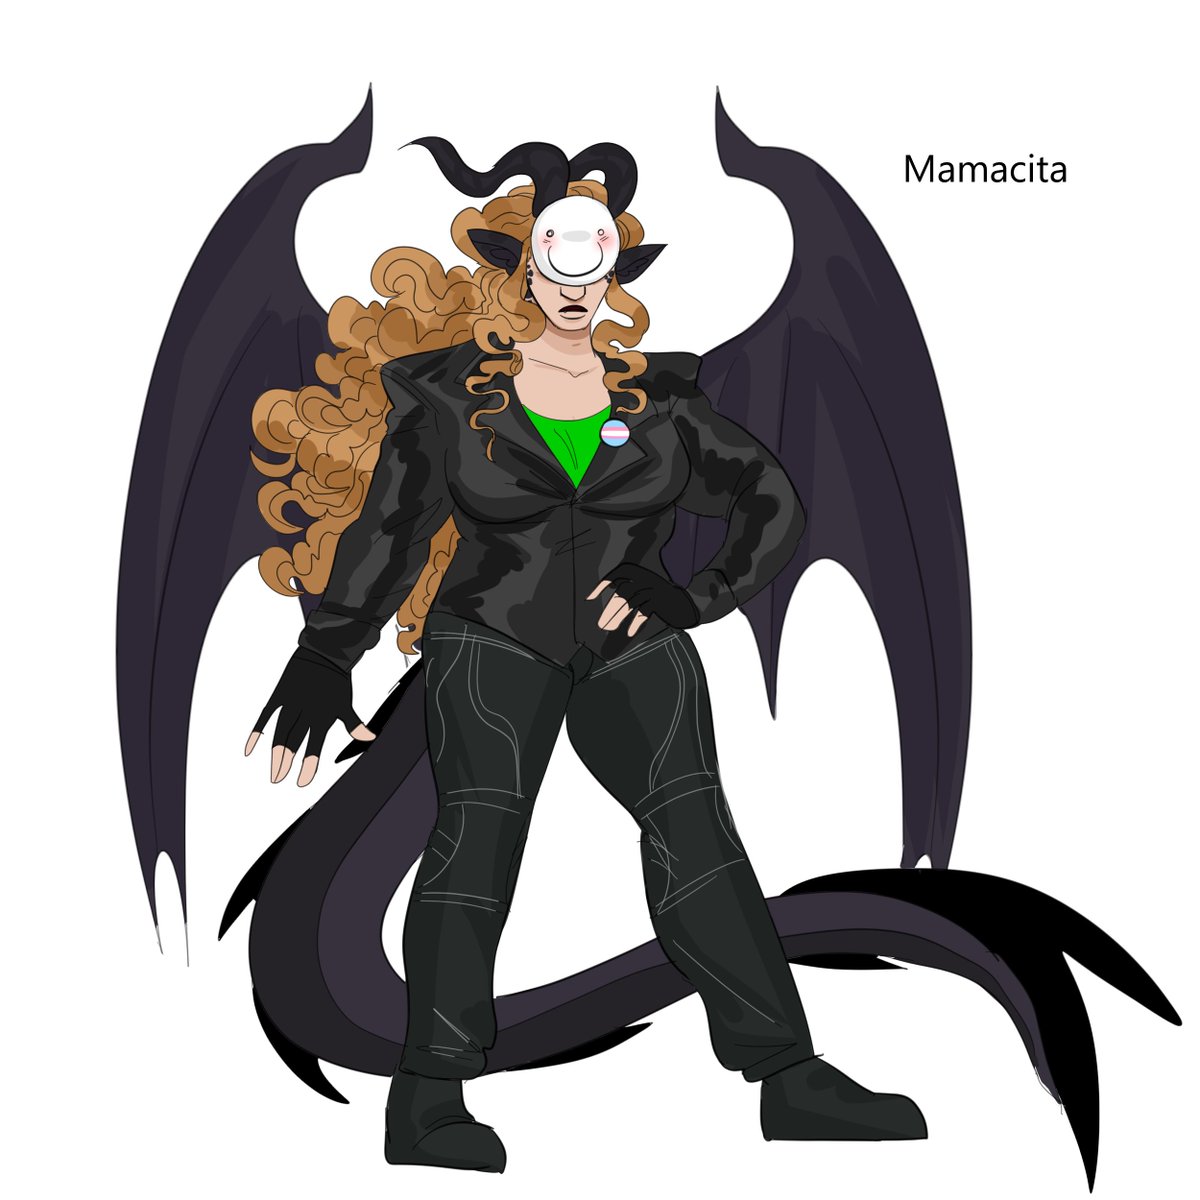 Mamacita design! Inspired partly by andy @lmanwife 's biker mamacita concept. she's an ender dragon hybrid and she's trans cause I say so

#mamacitafanart #mamacita #mexicandreamfanart 